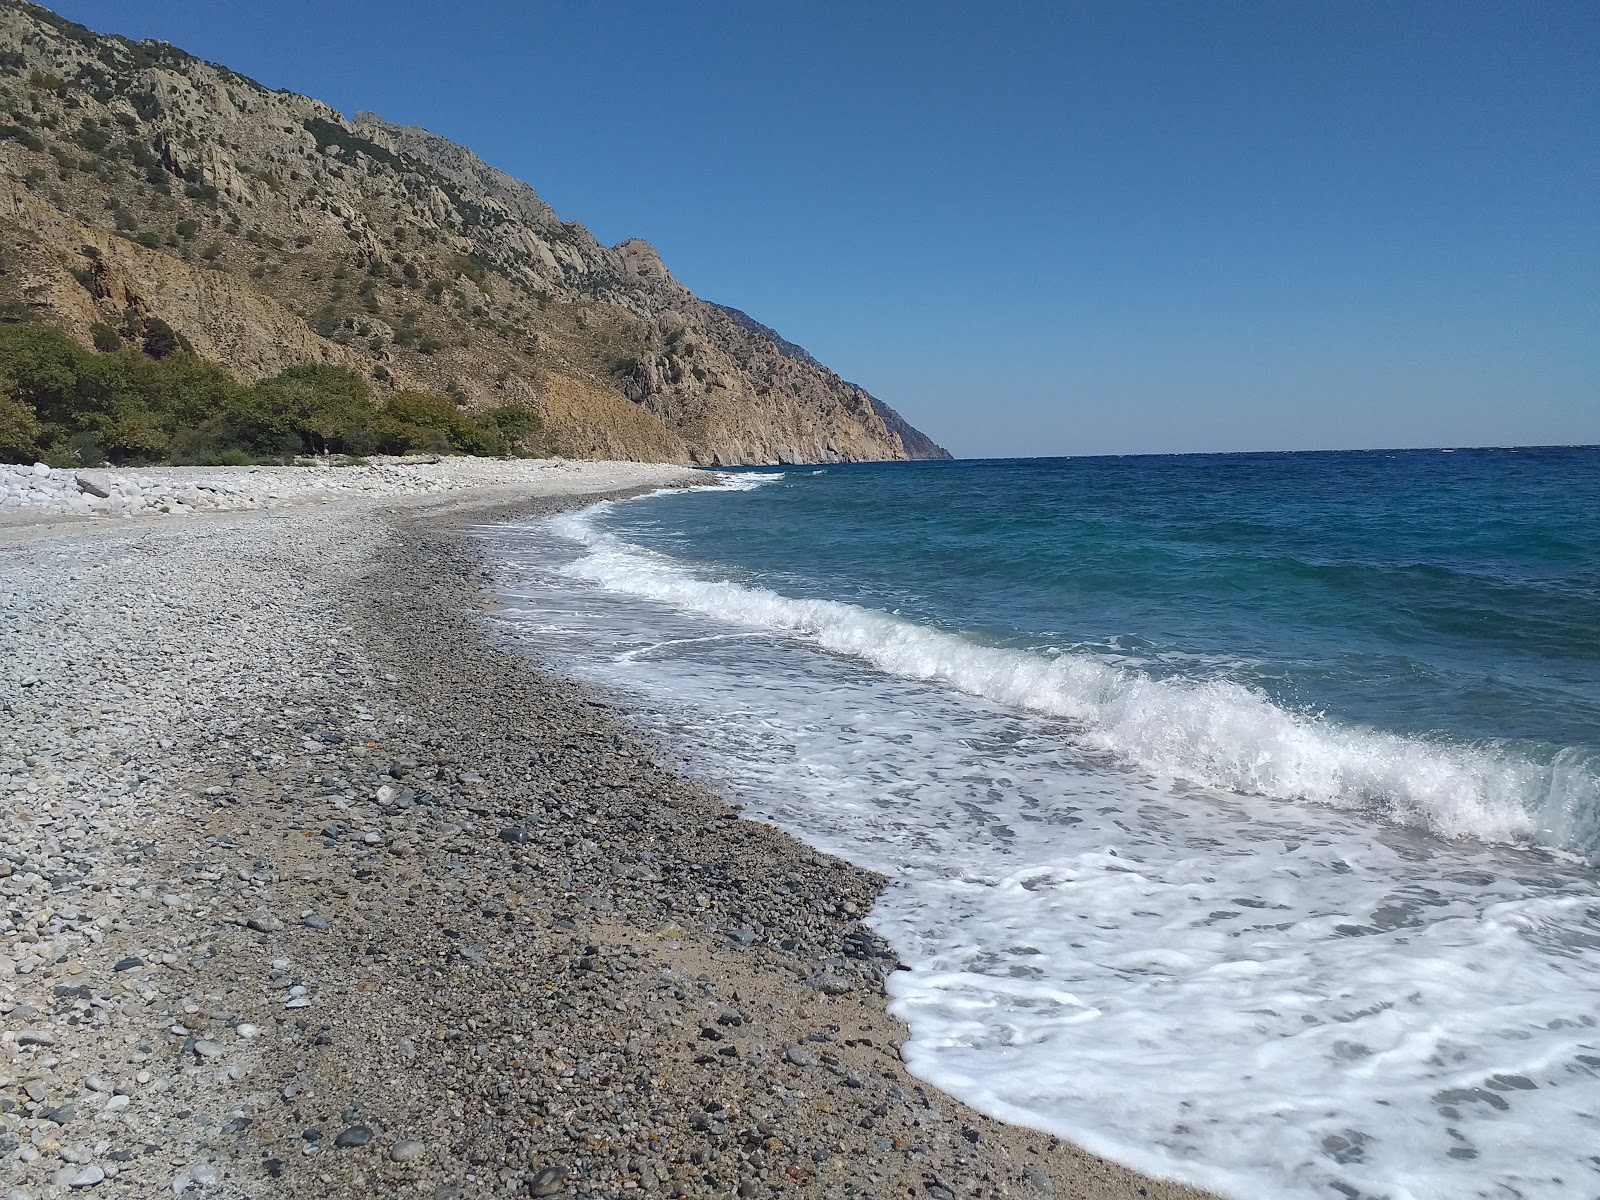 Fotografija Vatos beach z turkizna čista voda površino